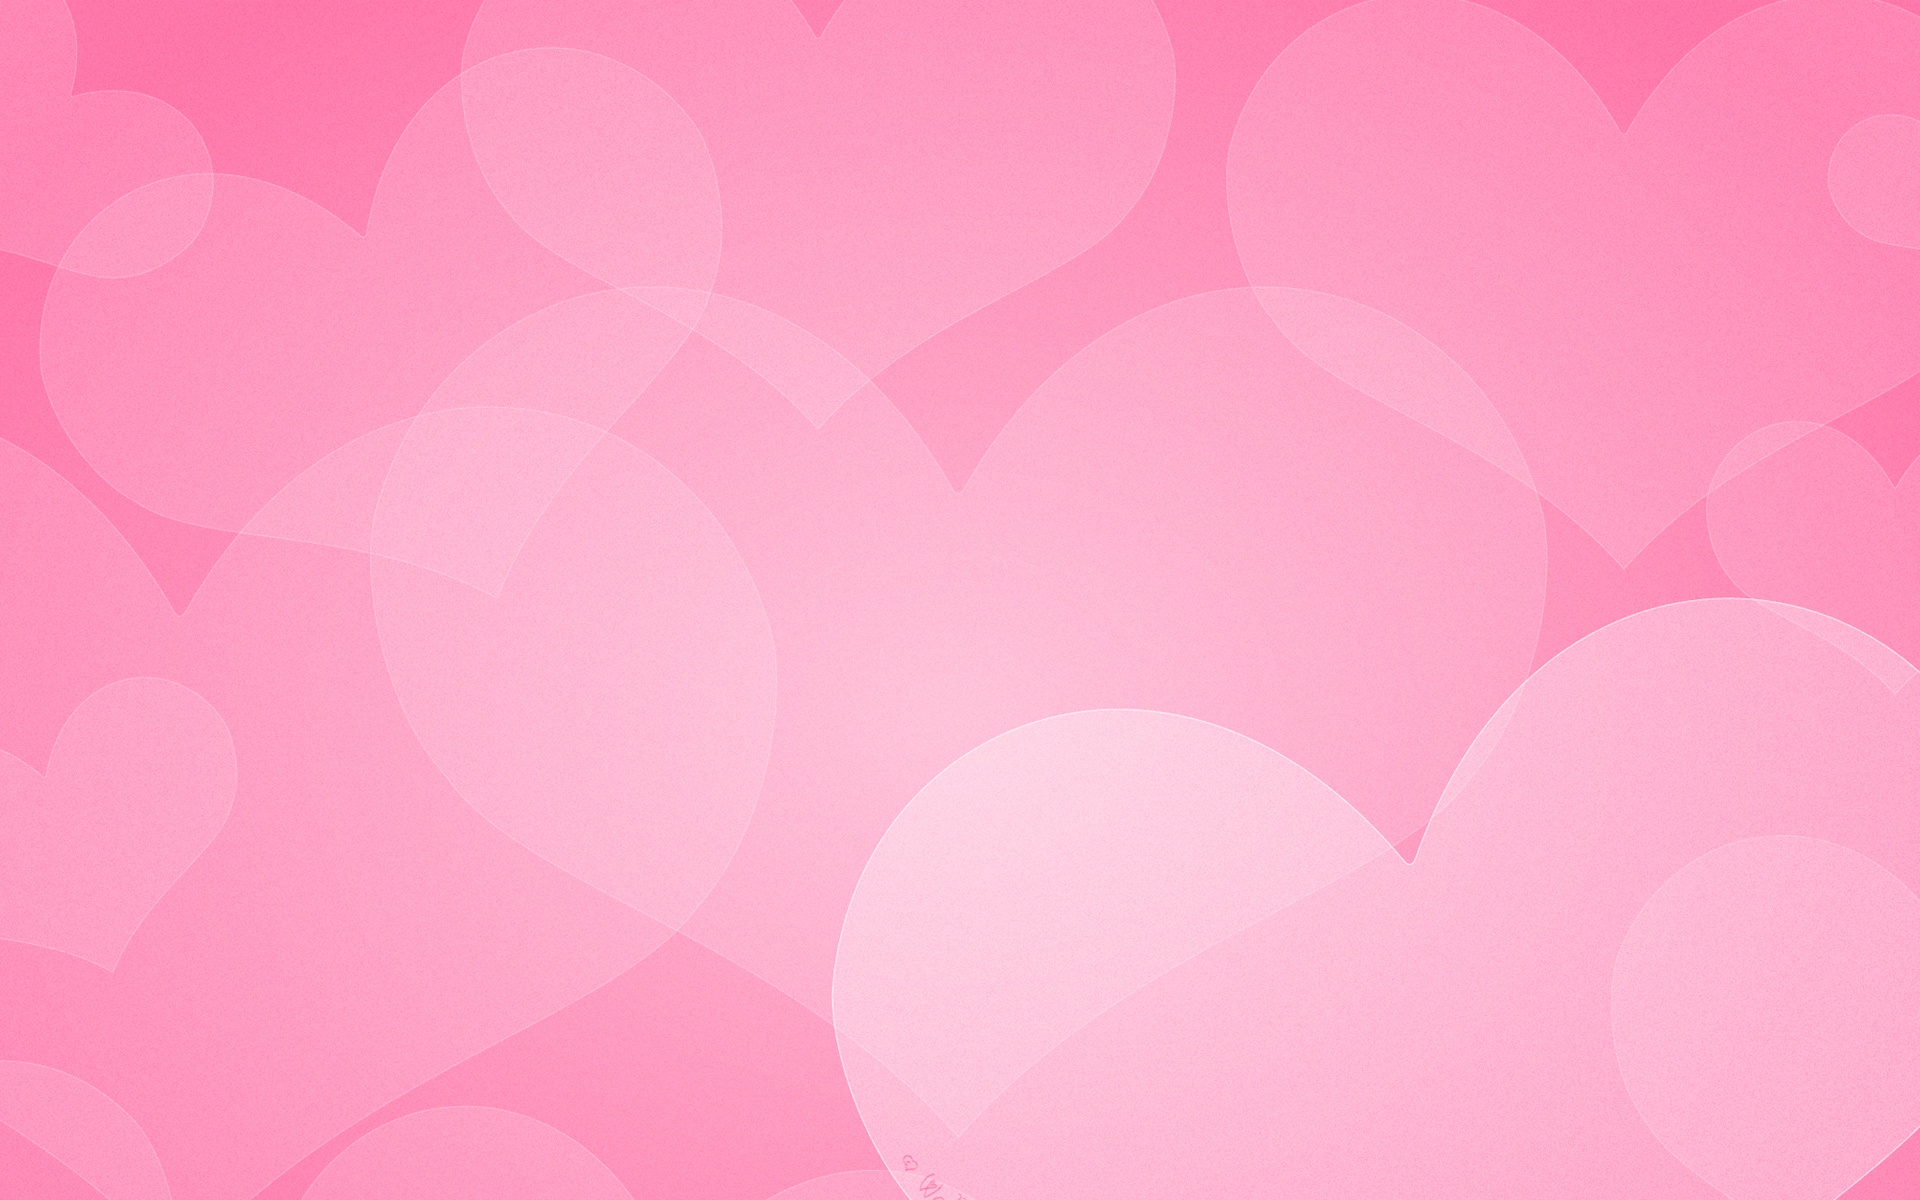 67+] Pink Hearts Background - WallpaperSafari